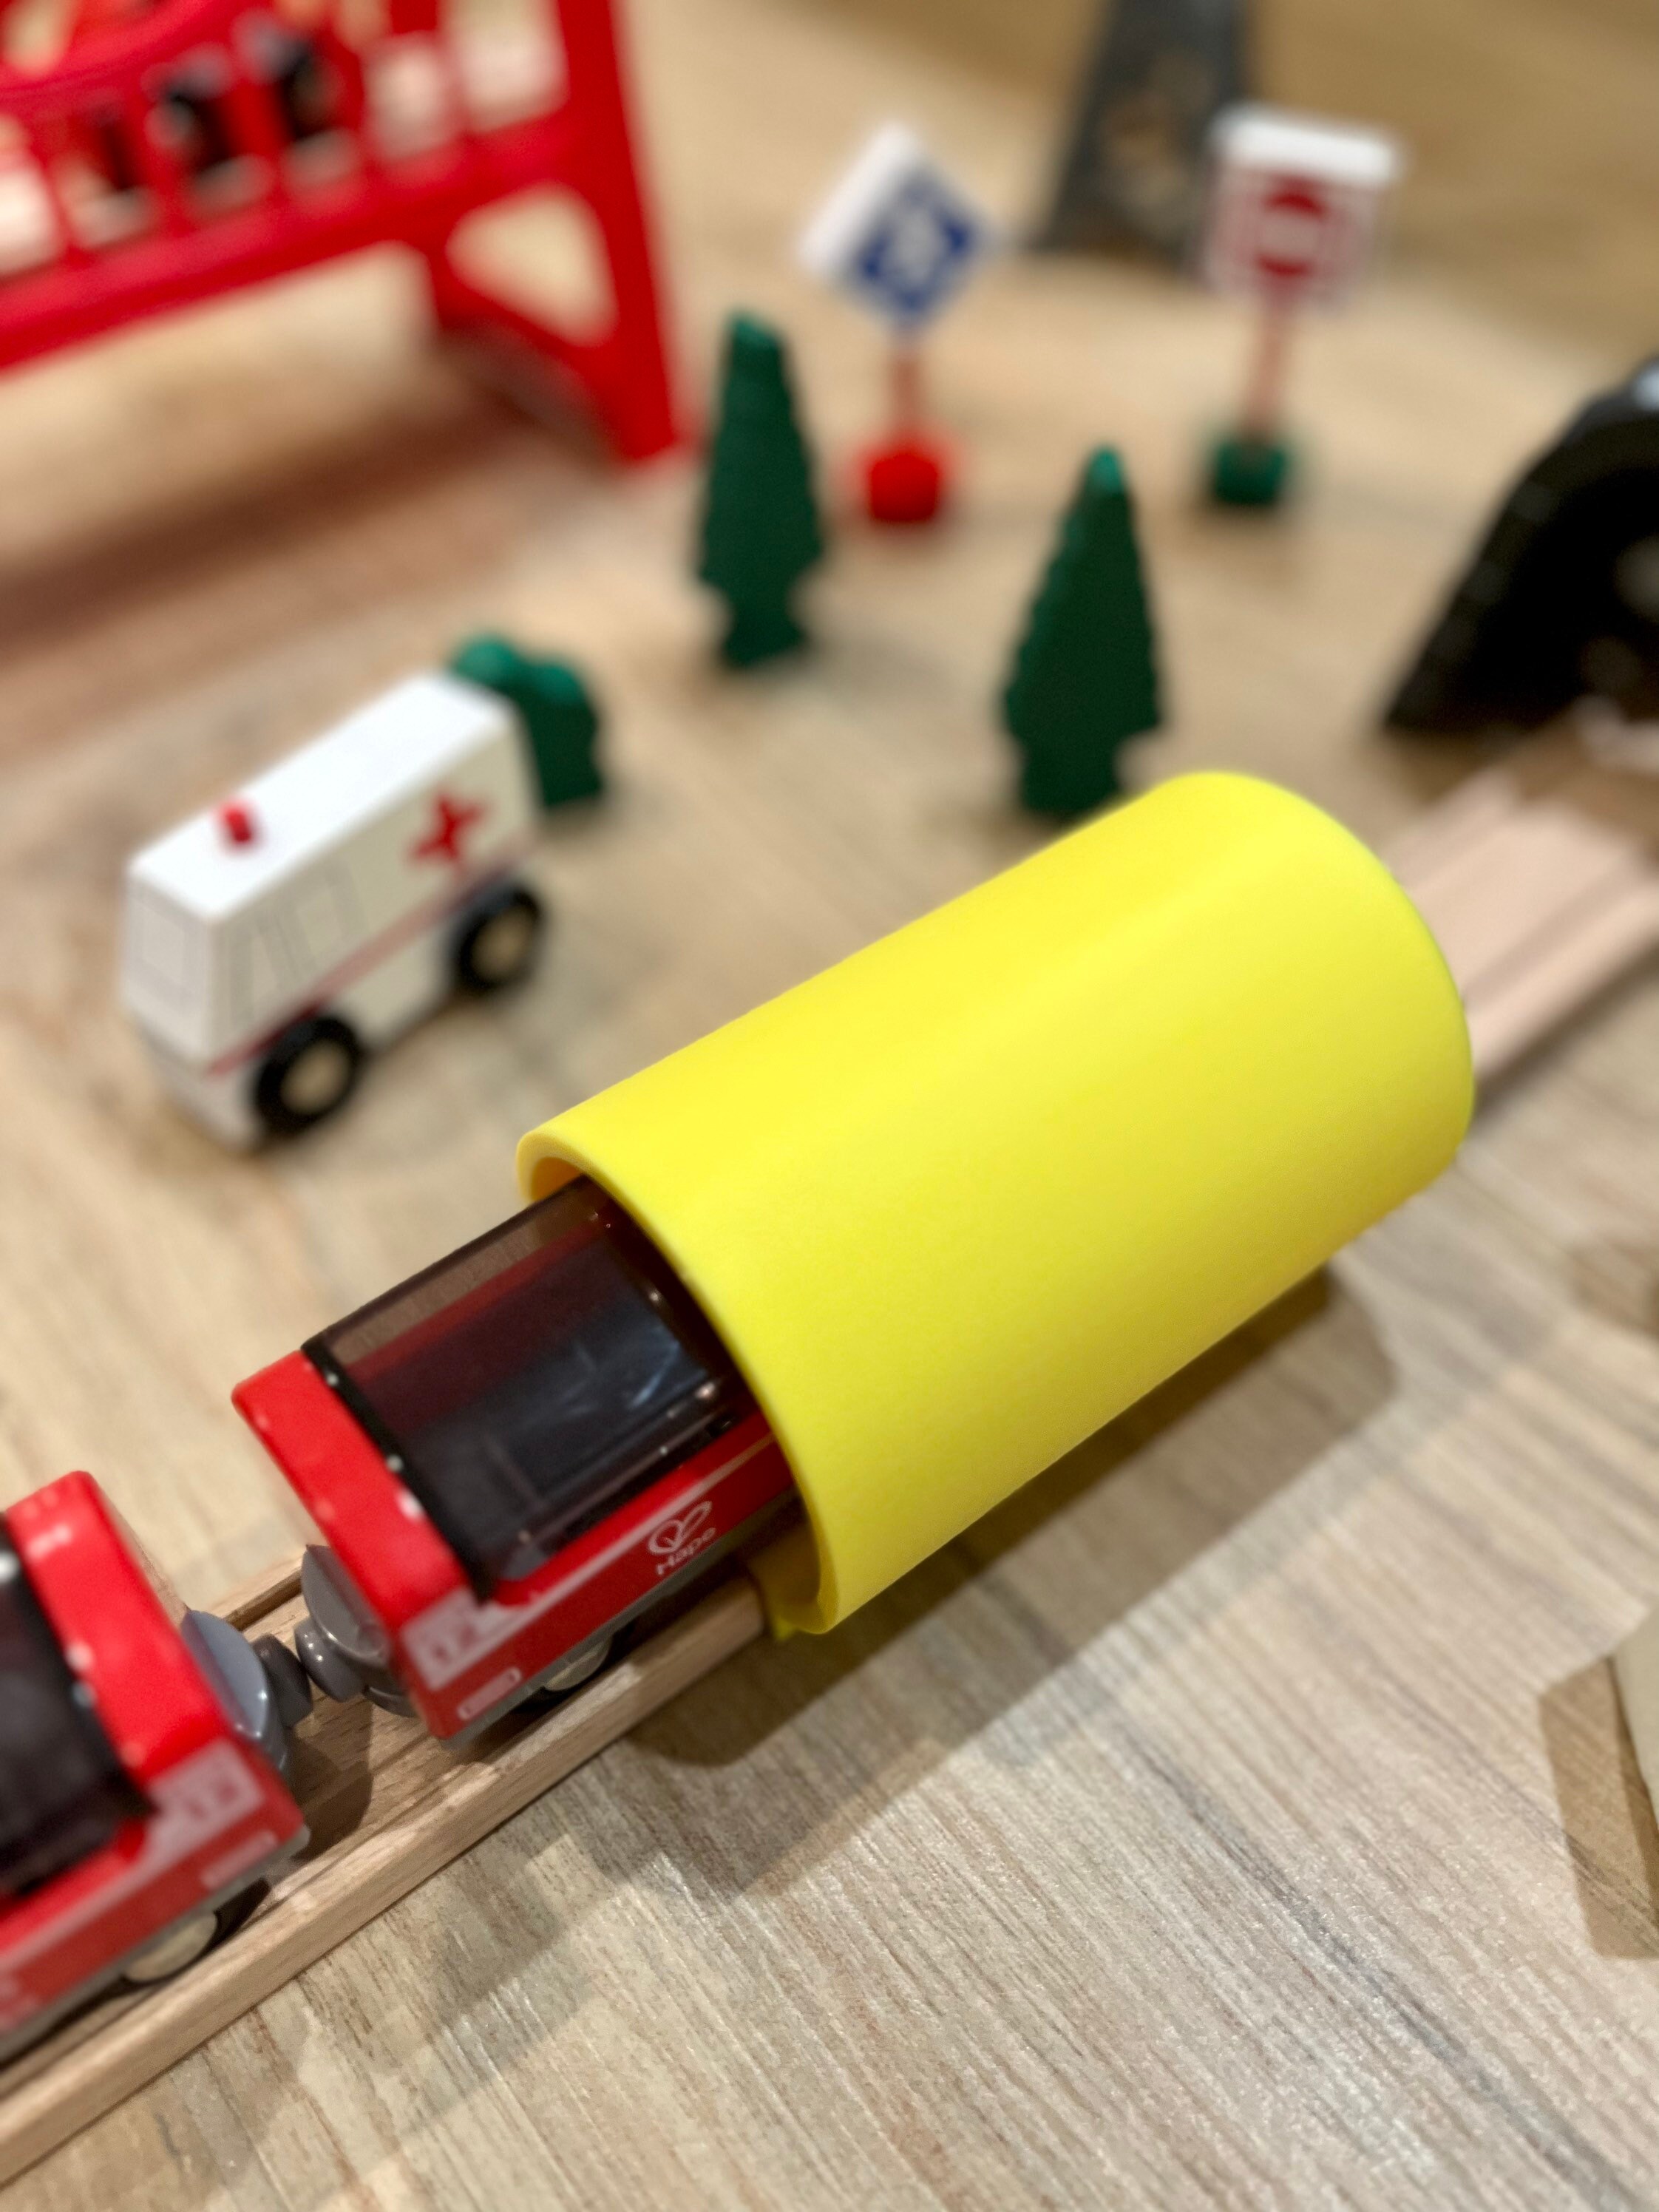 Train Tunnel for Wooden Train Tracks. Compatible With Brio, Thomas the Train,  Hape, and IKEA Trains. Montessori Toys for Kids, Pretend Play 